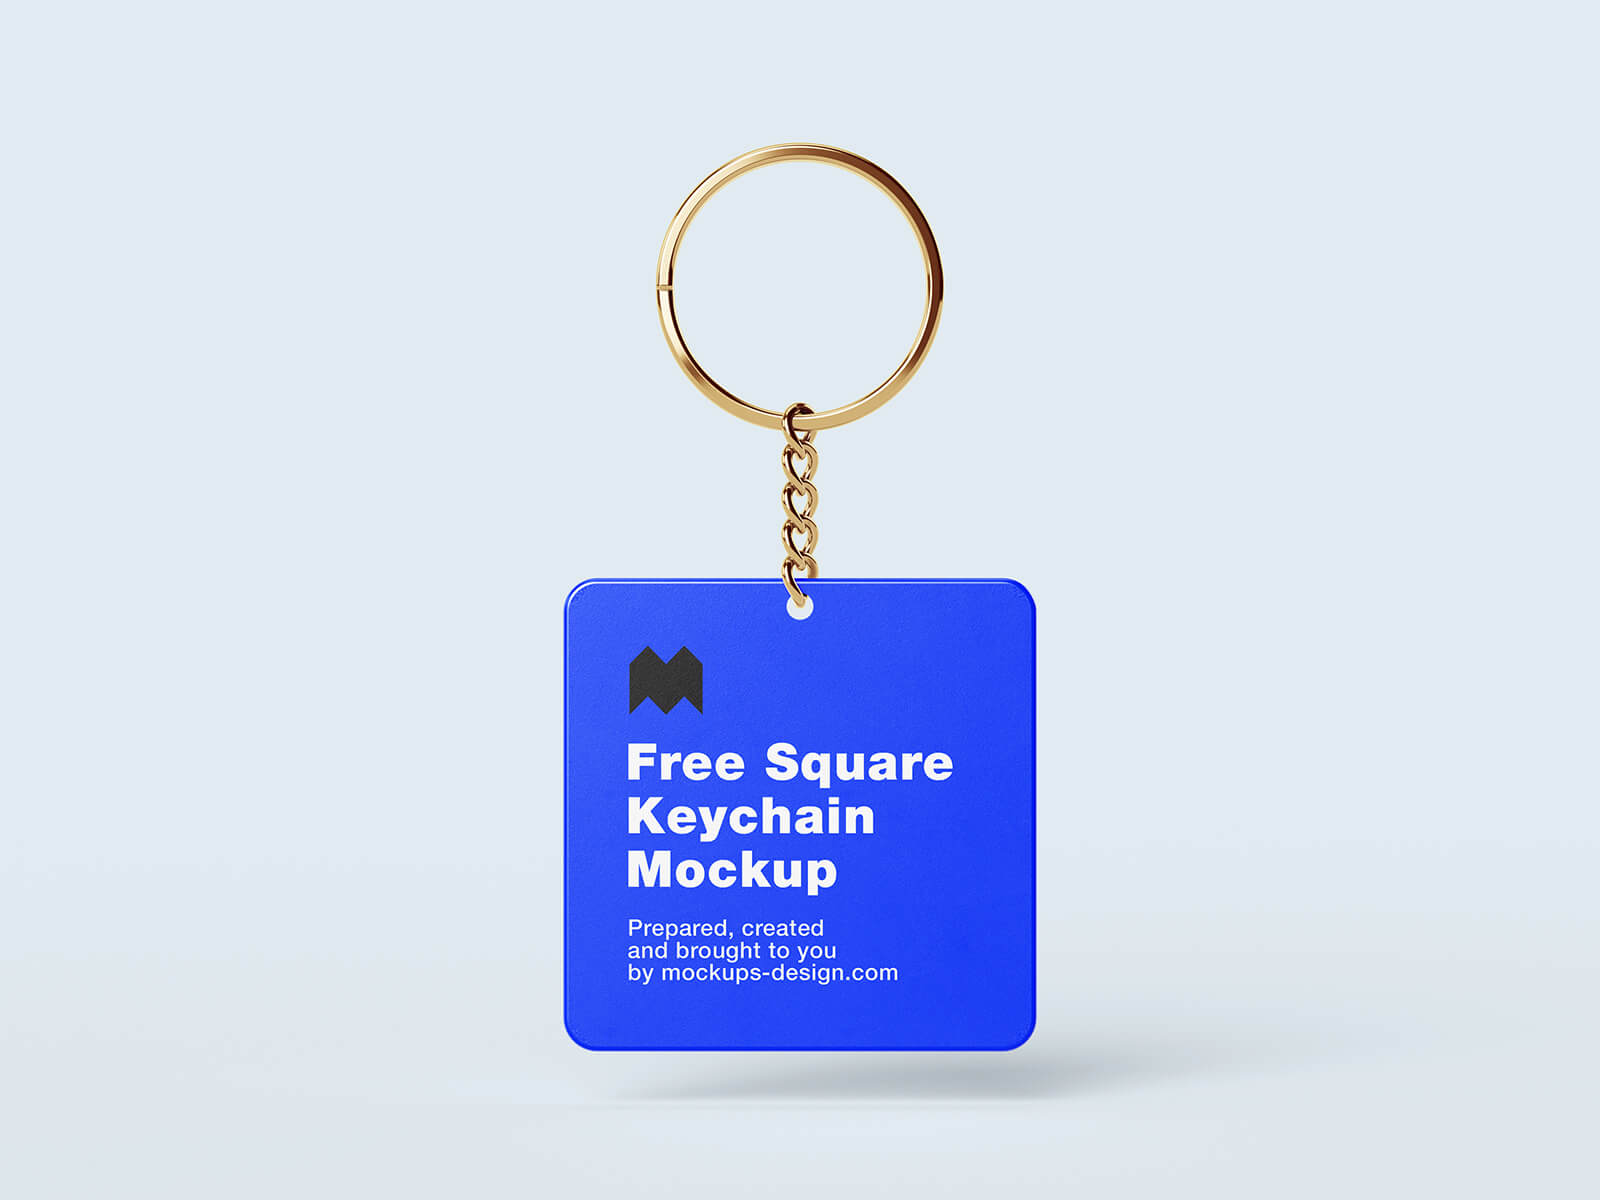 Free Square Keychain Mockup PSD